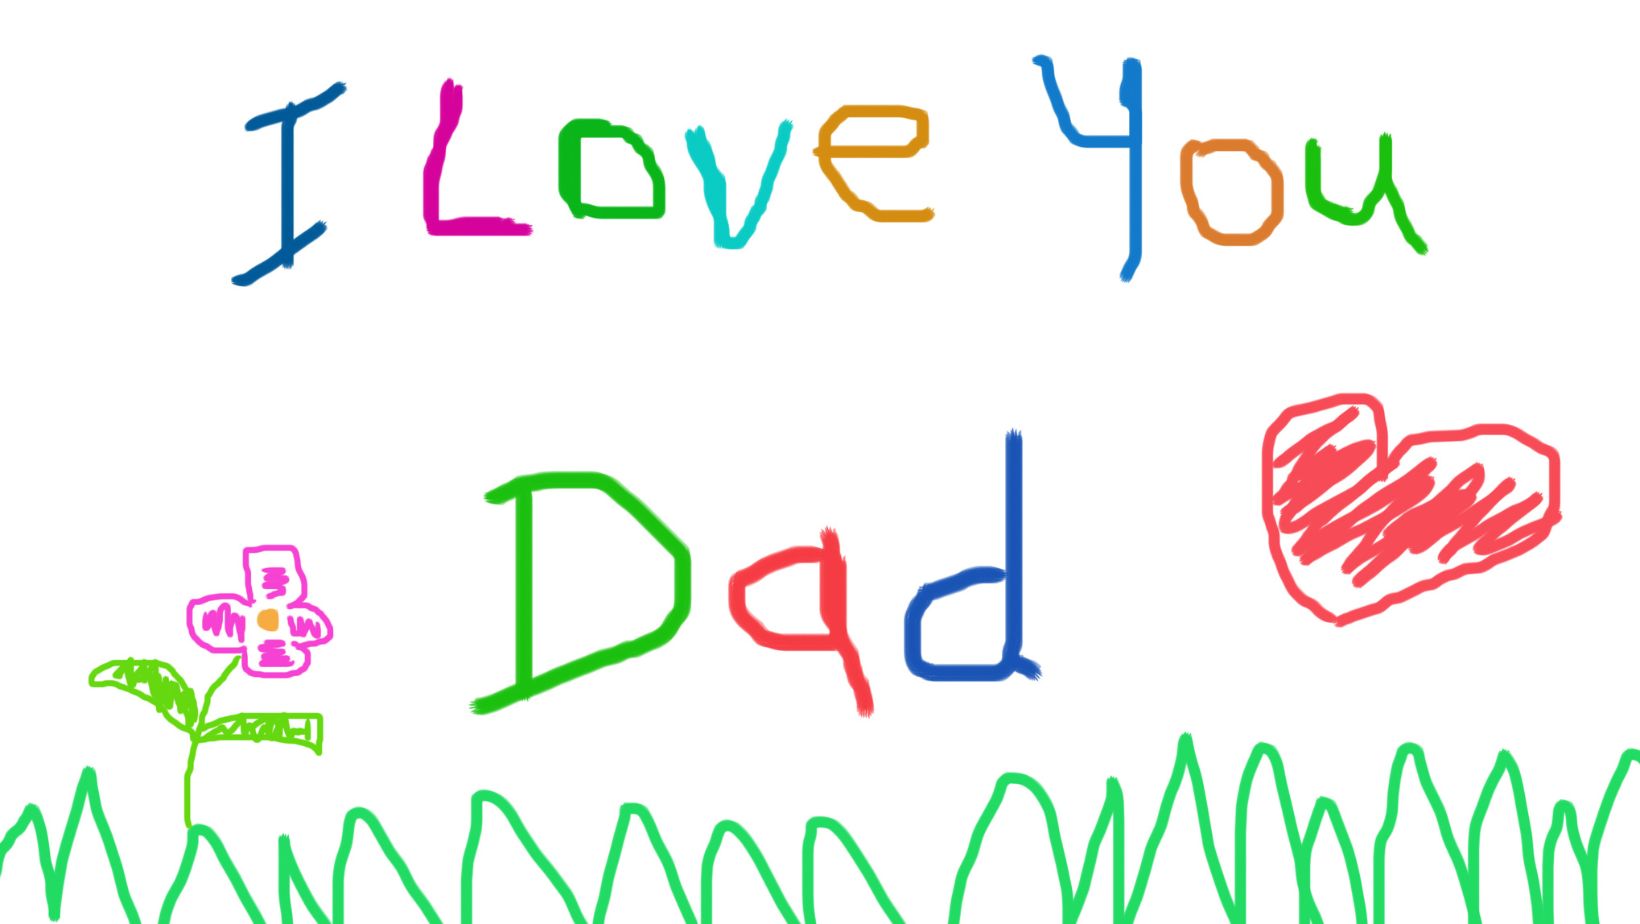 love you papa